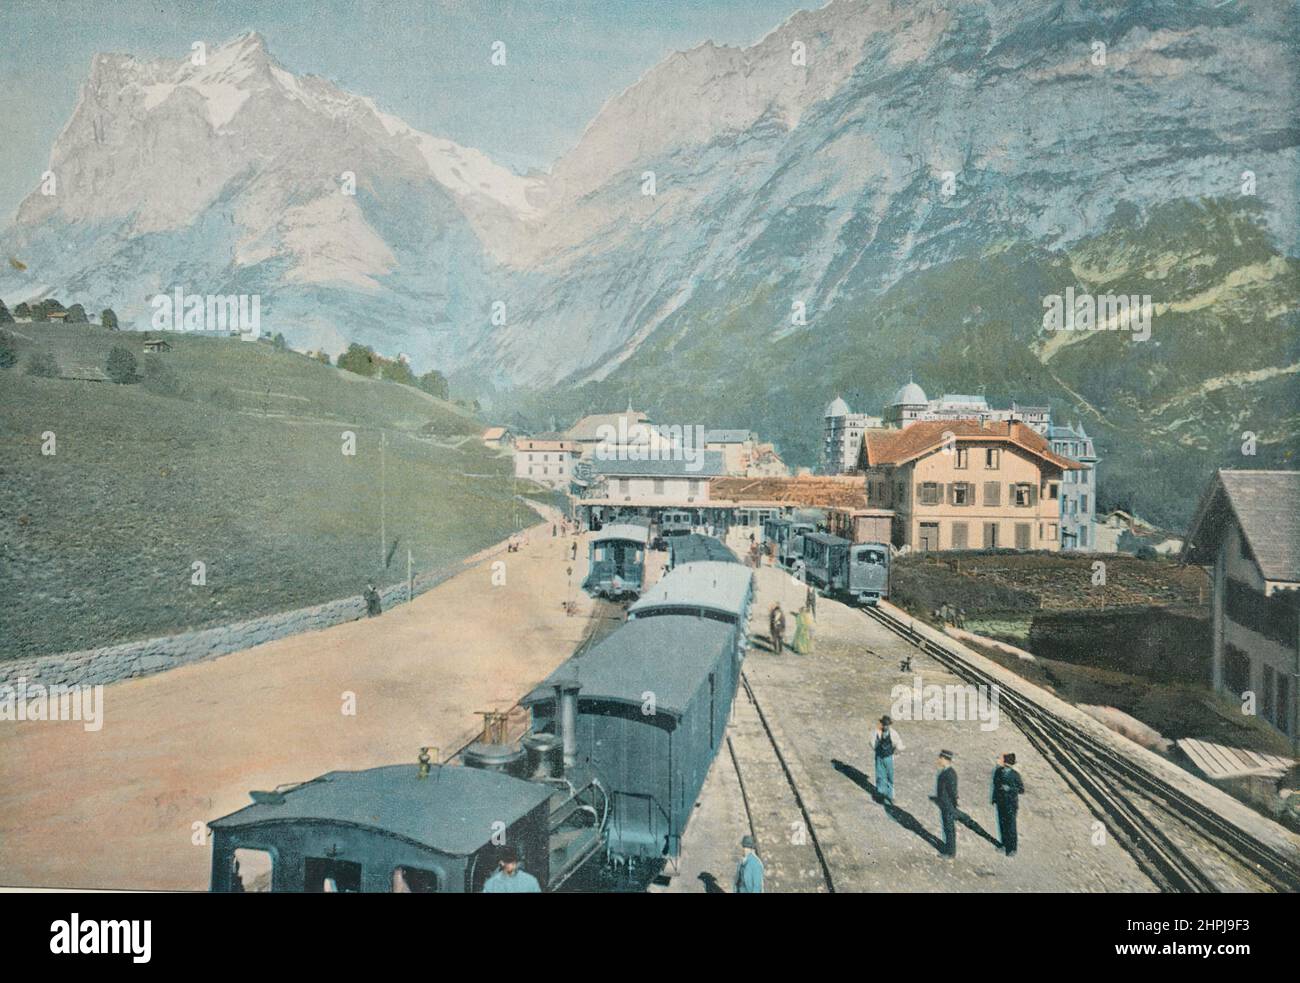 GRINDELWALD. LA GARE Autour Du Monde  - Suisse 1895 - 1900  (4)  - 19 th century french colored photography print Stock Photo